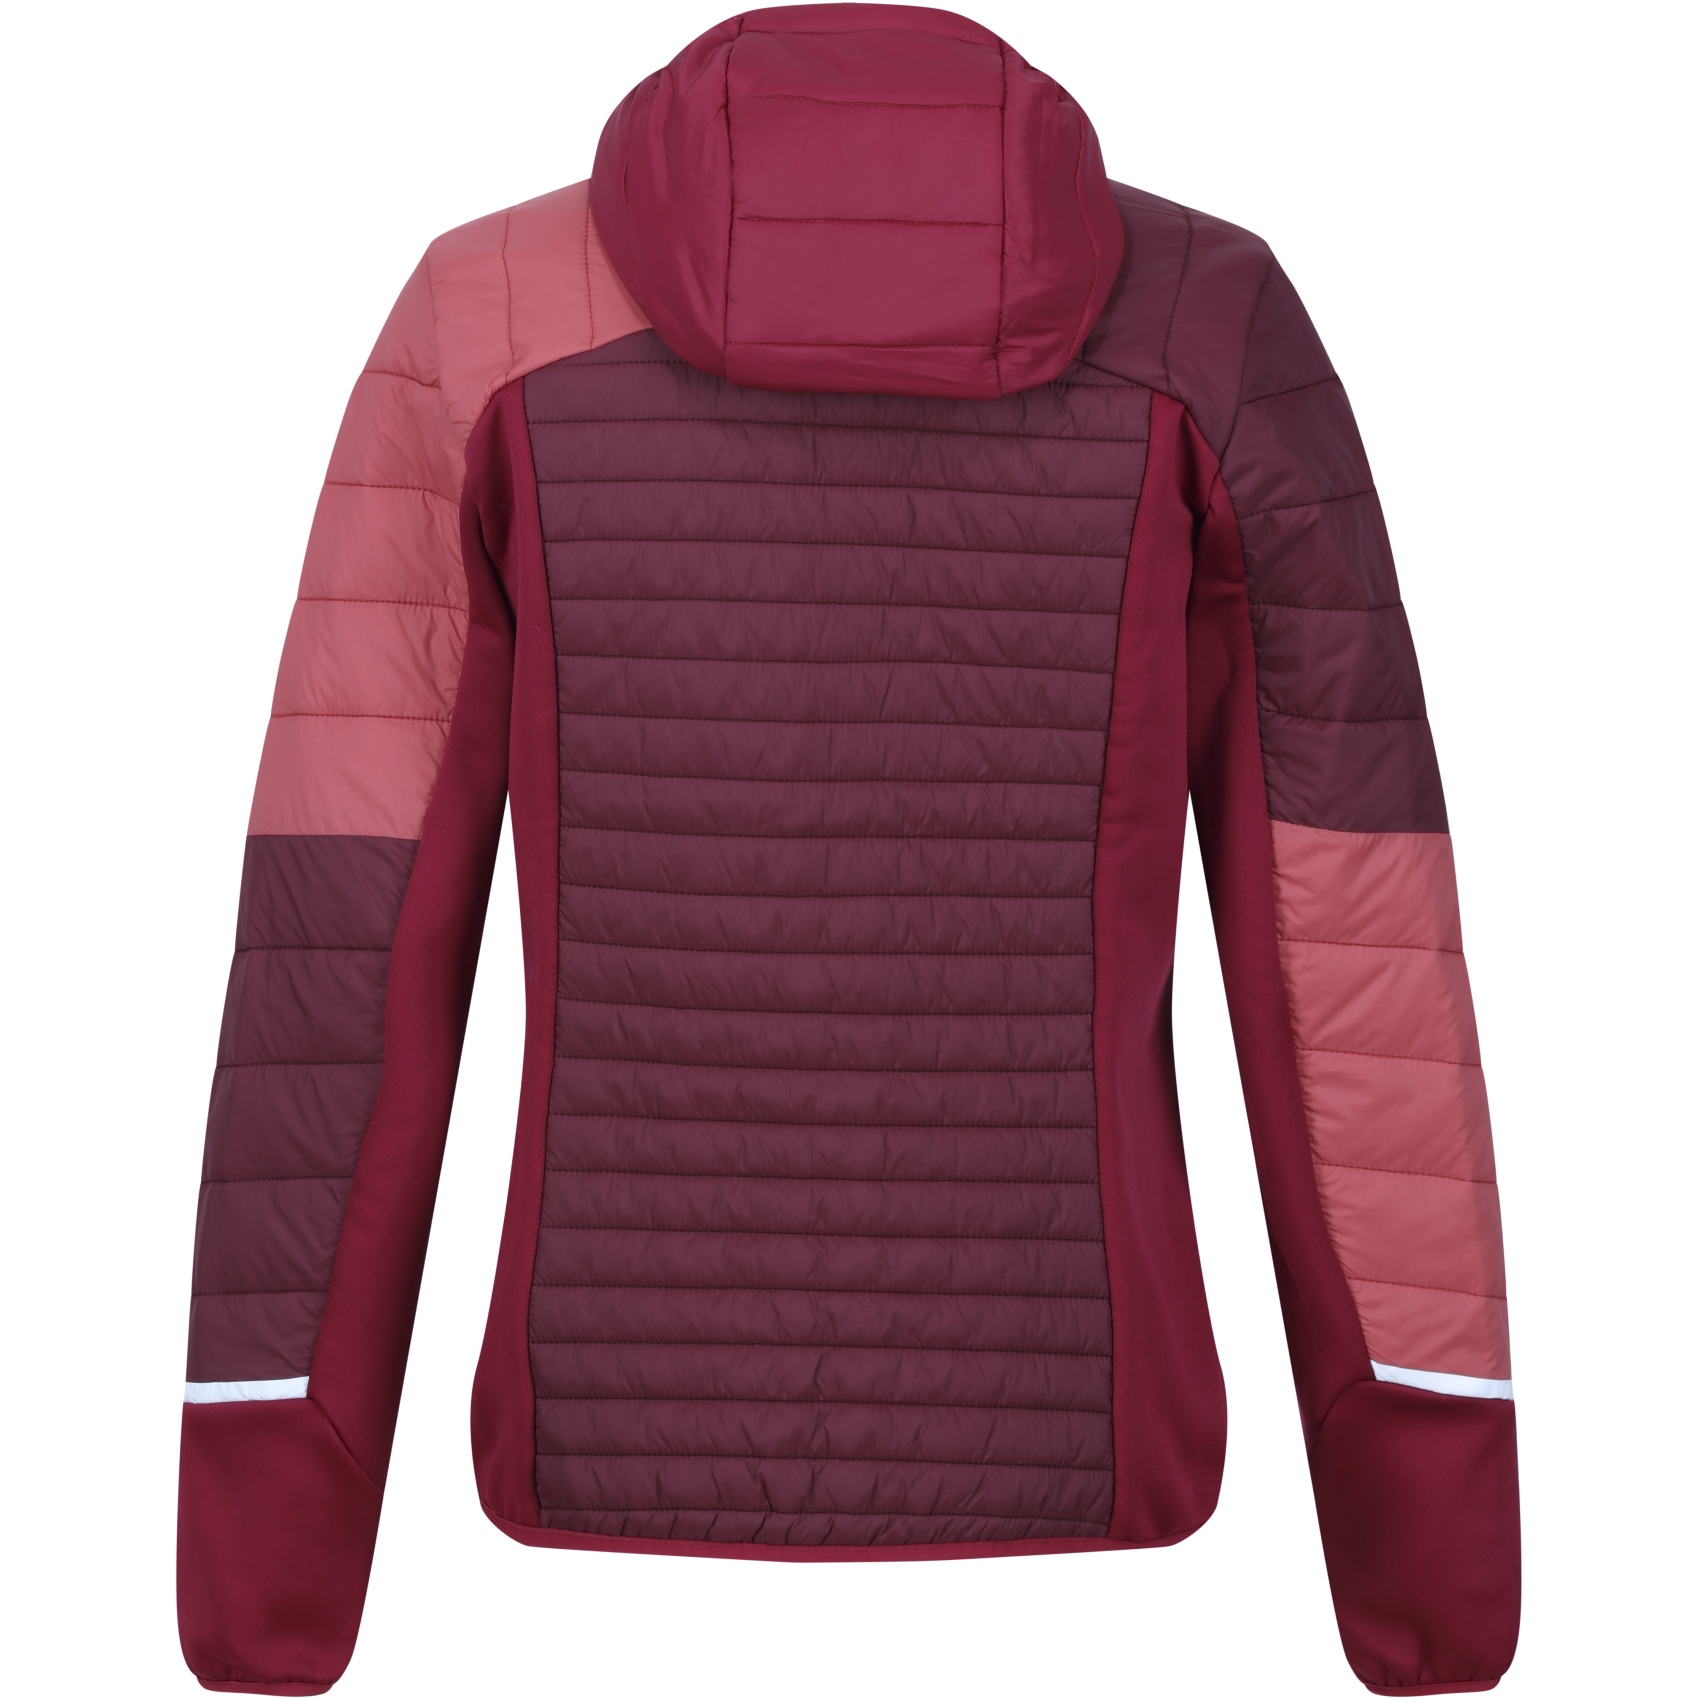 Regatta Trutton II Jacket Women - Burgundy/Rumba Red/Mineral Red XWI |  BIKE24